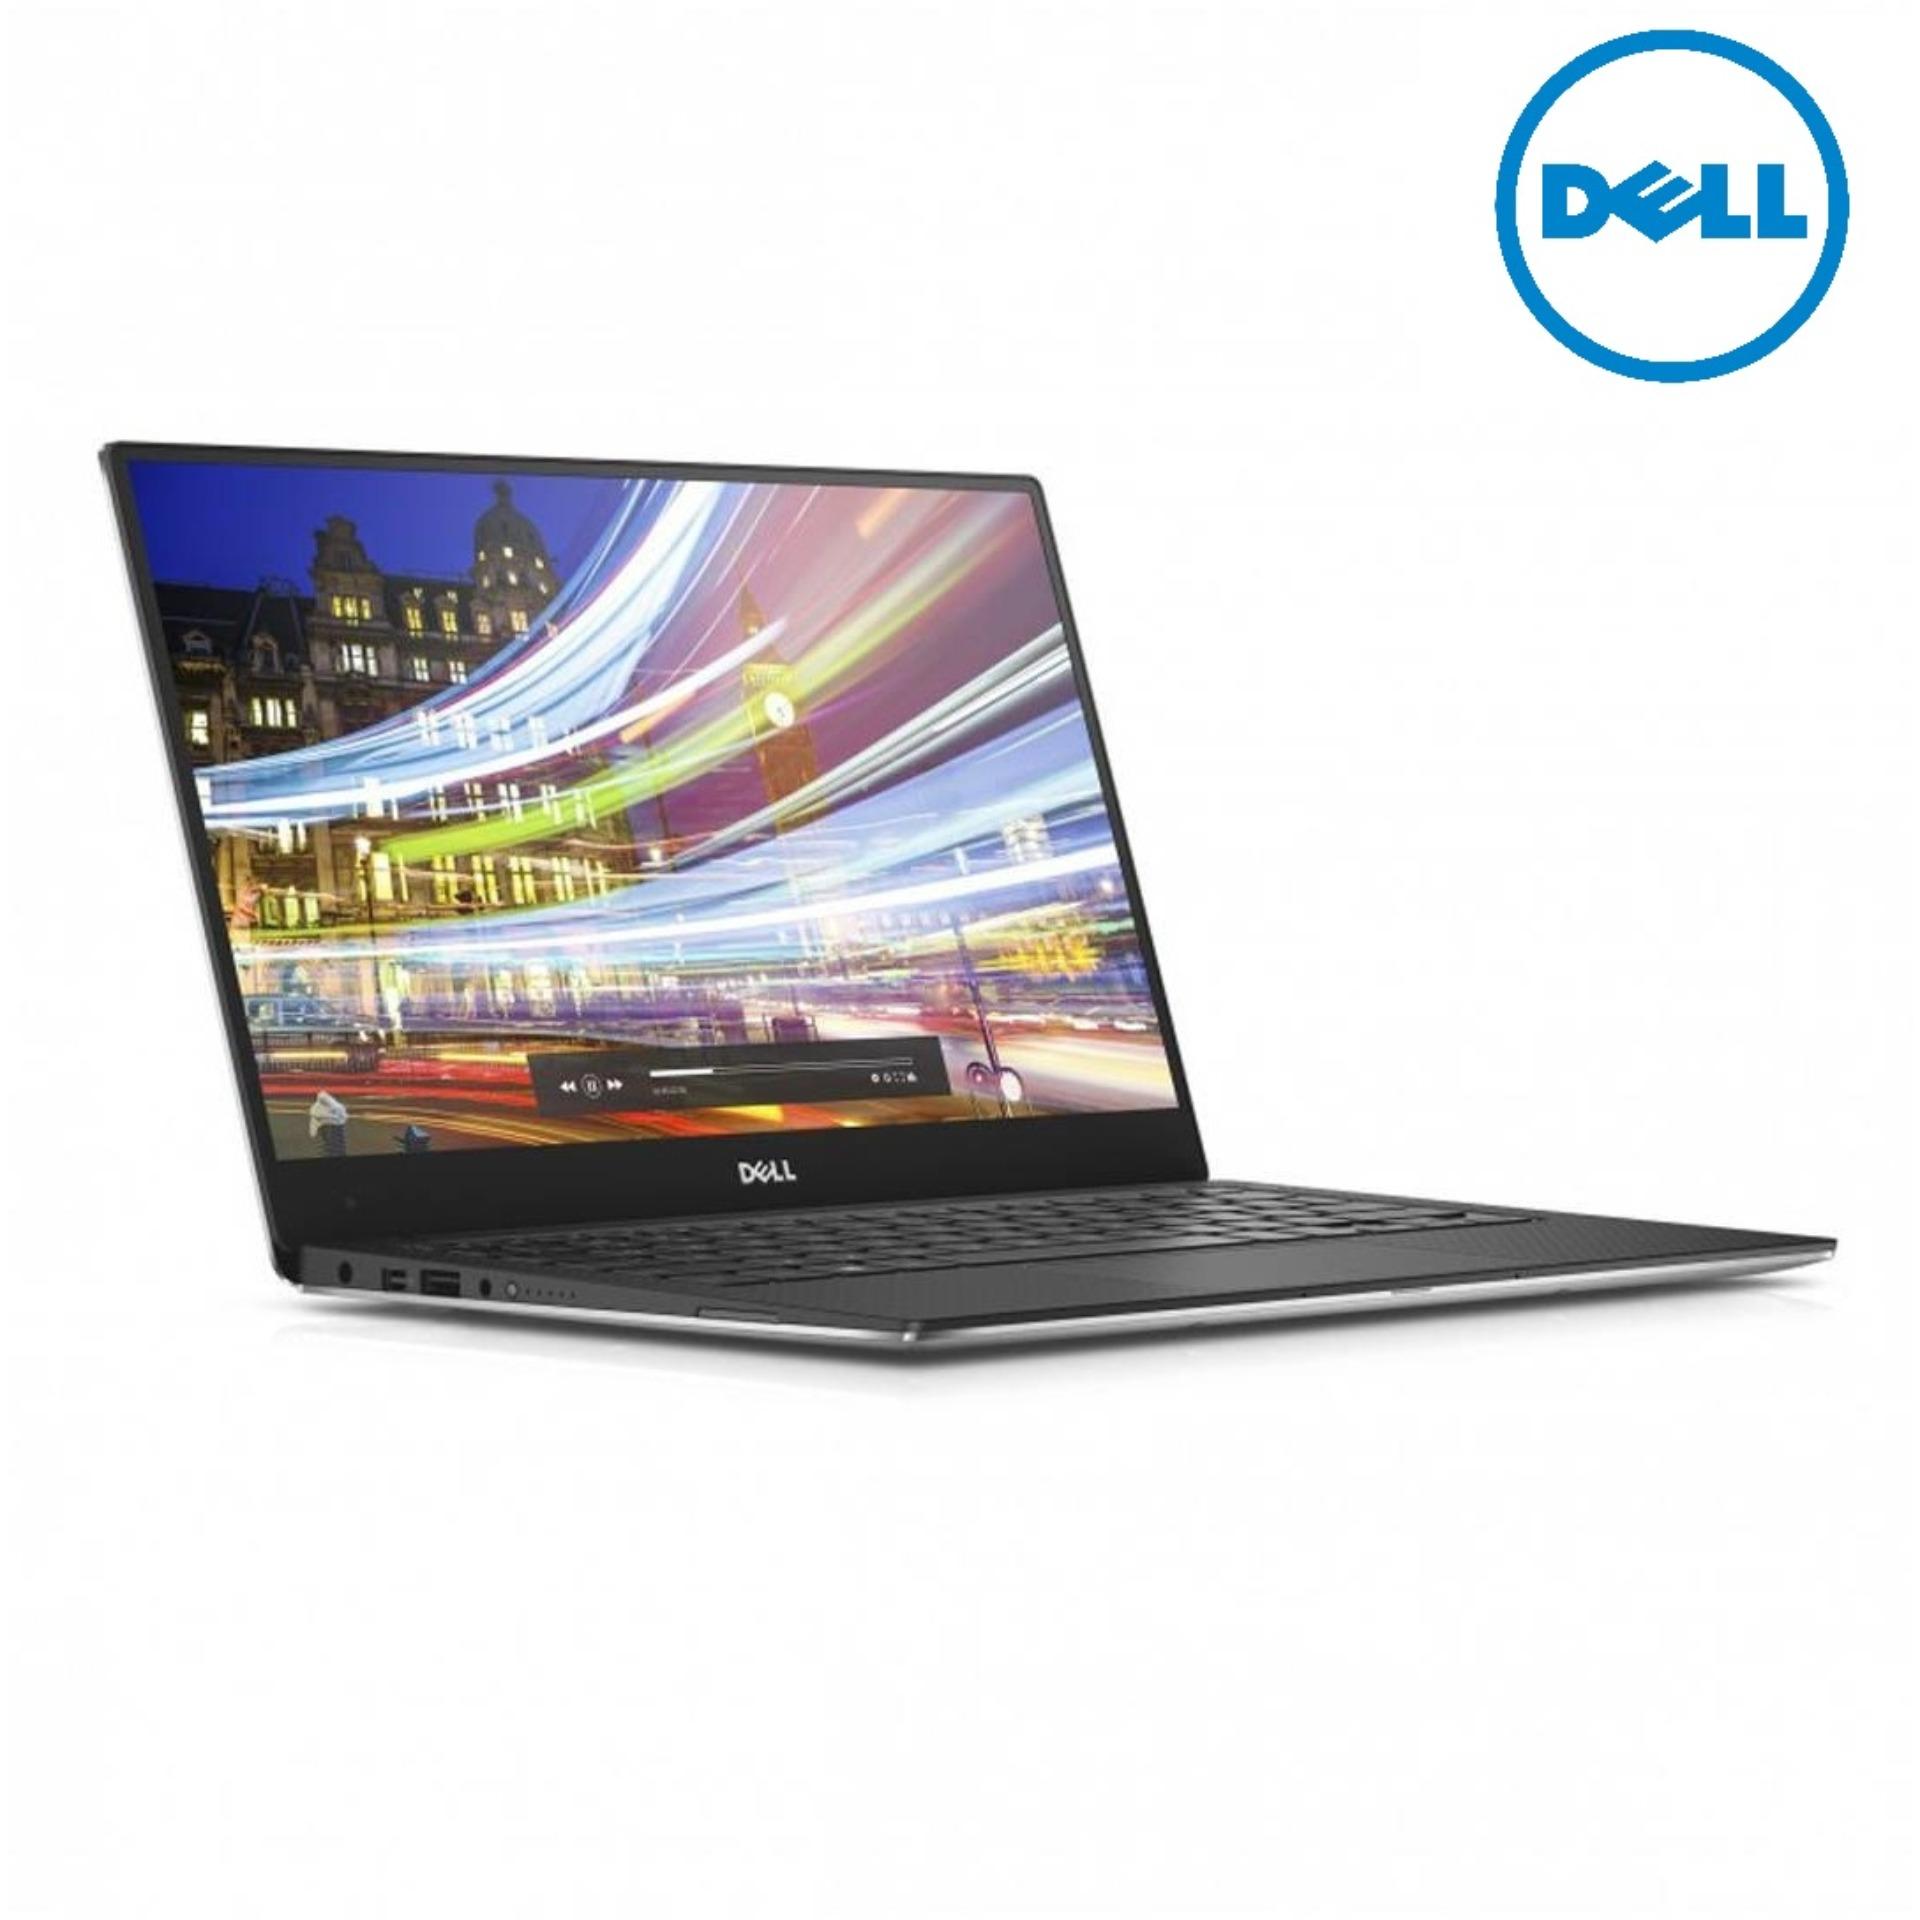 New Dell XPS13 9360-82582SGL-W10 -i5-8250u Laptop (Silver)